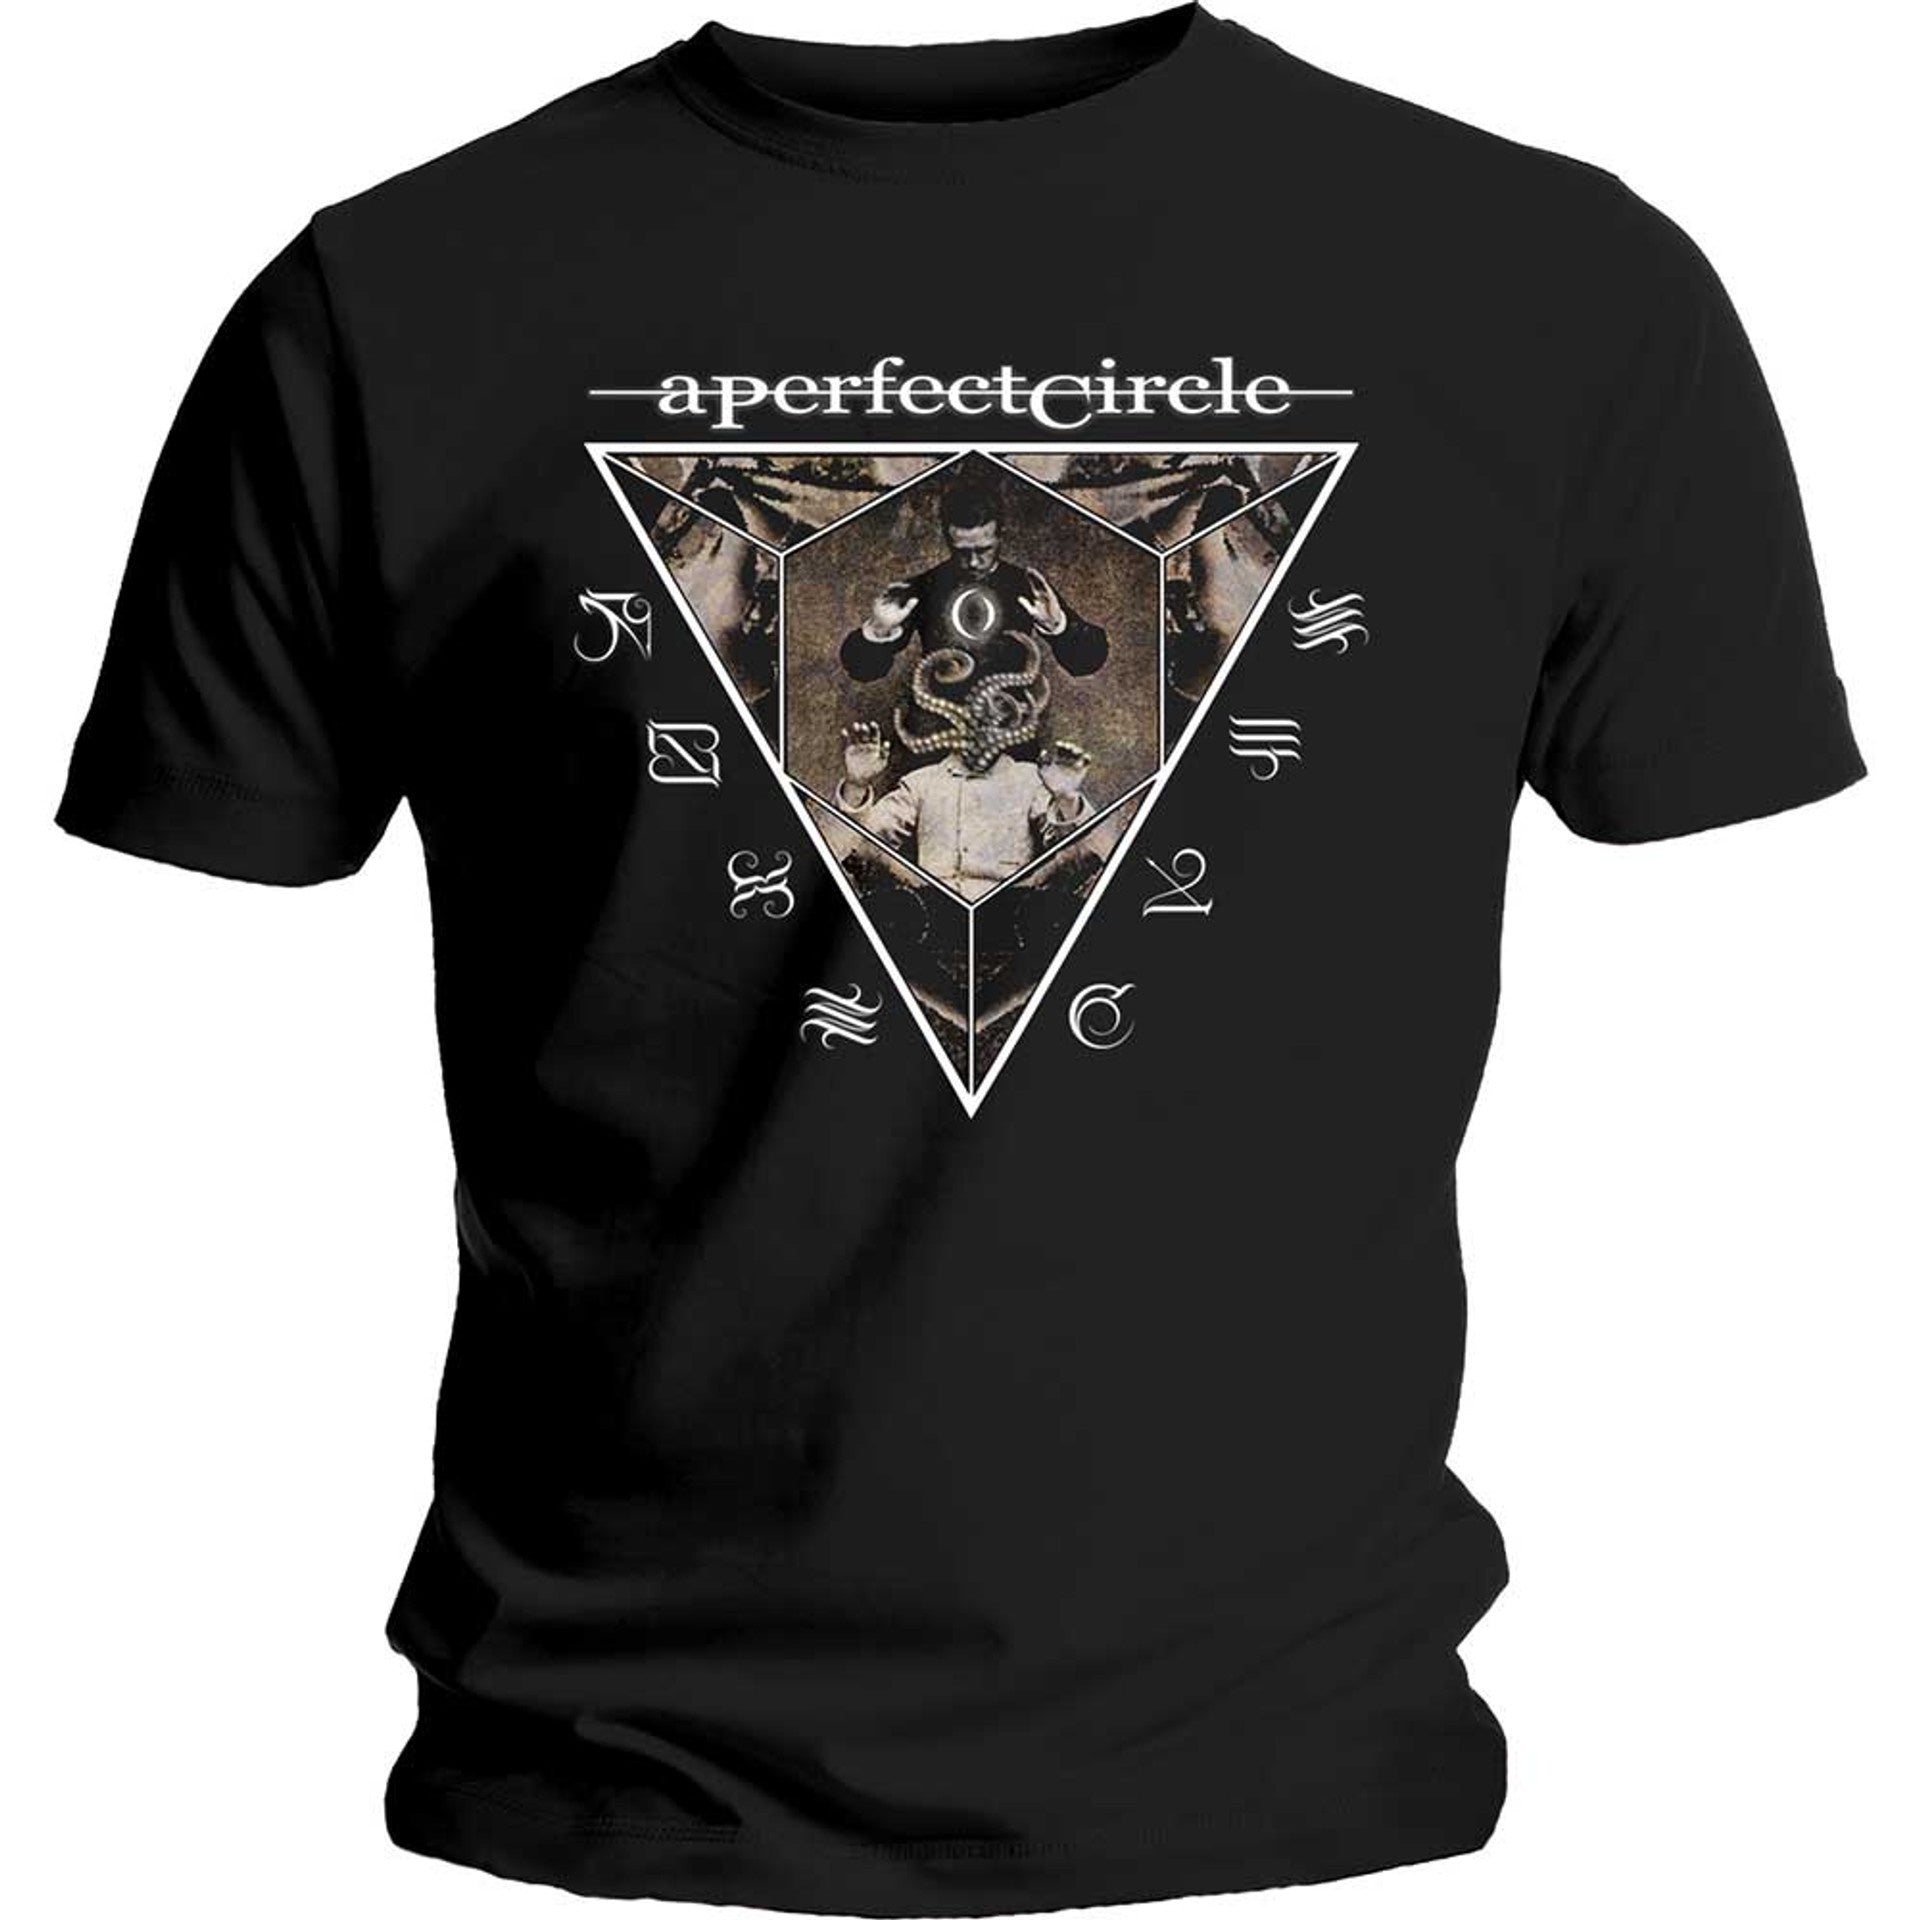 A Perfect Circle - Outsider T-shirt